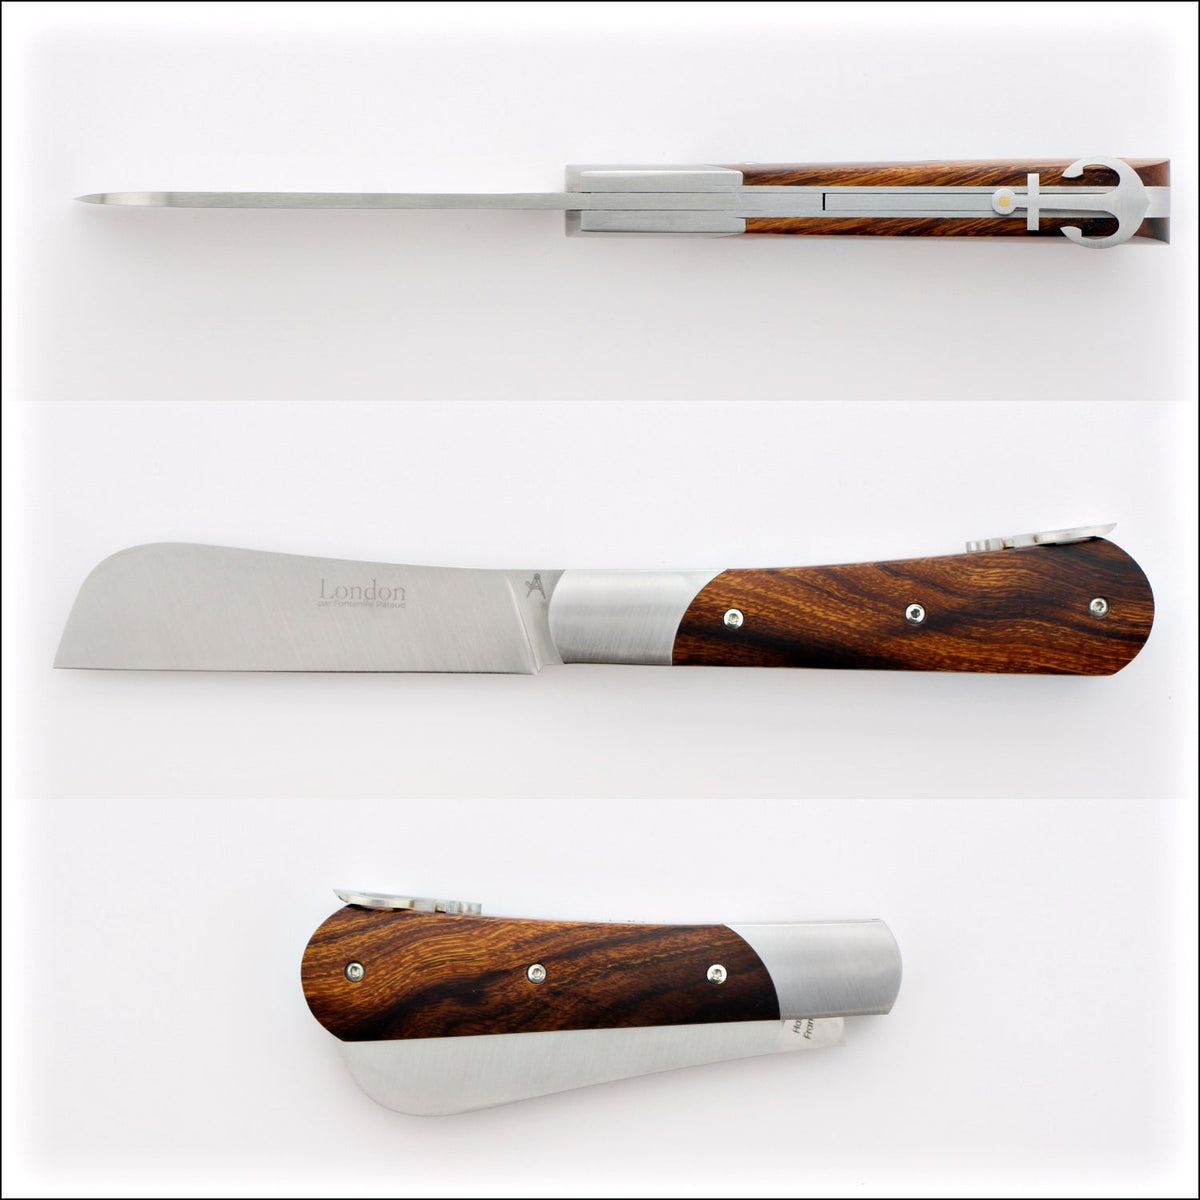 London 11 cm Desert Ironwood Handle Folding Knife